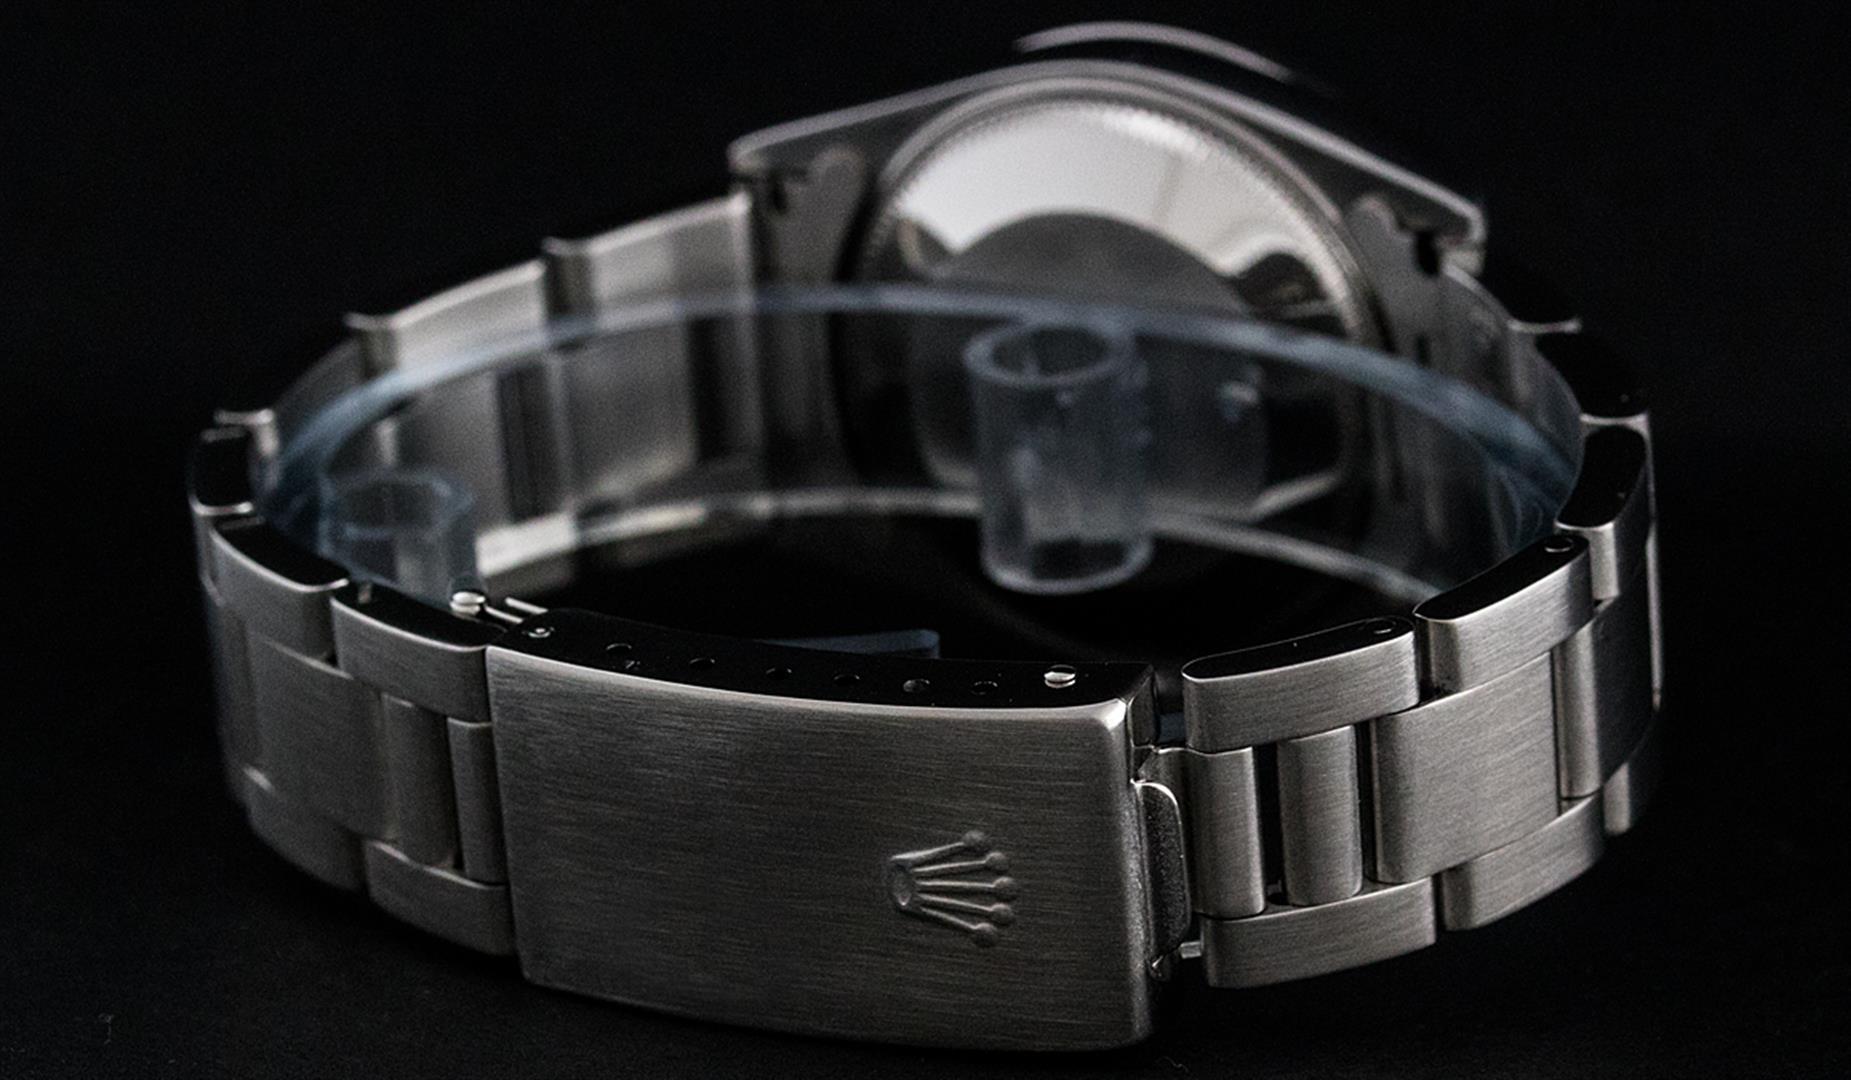 Rolex Womens Midsize 31mm Blue String Diamond & Sapphire Datejust Wristwatch